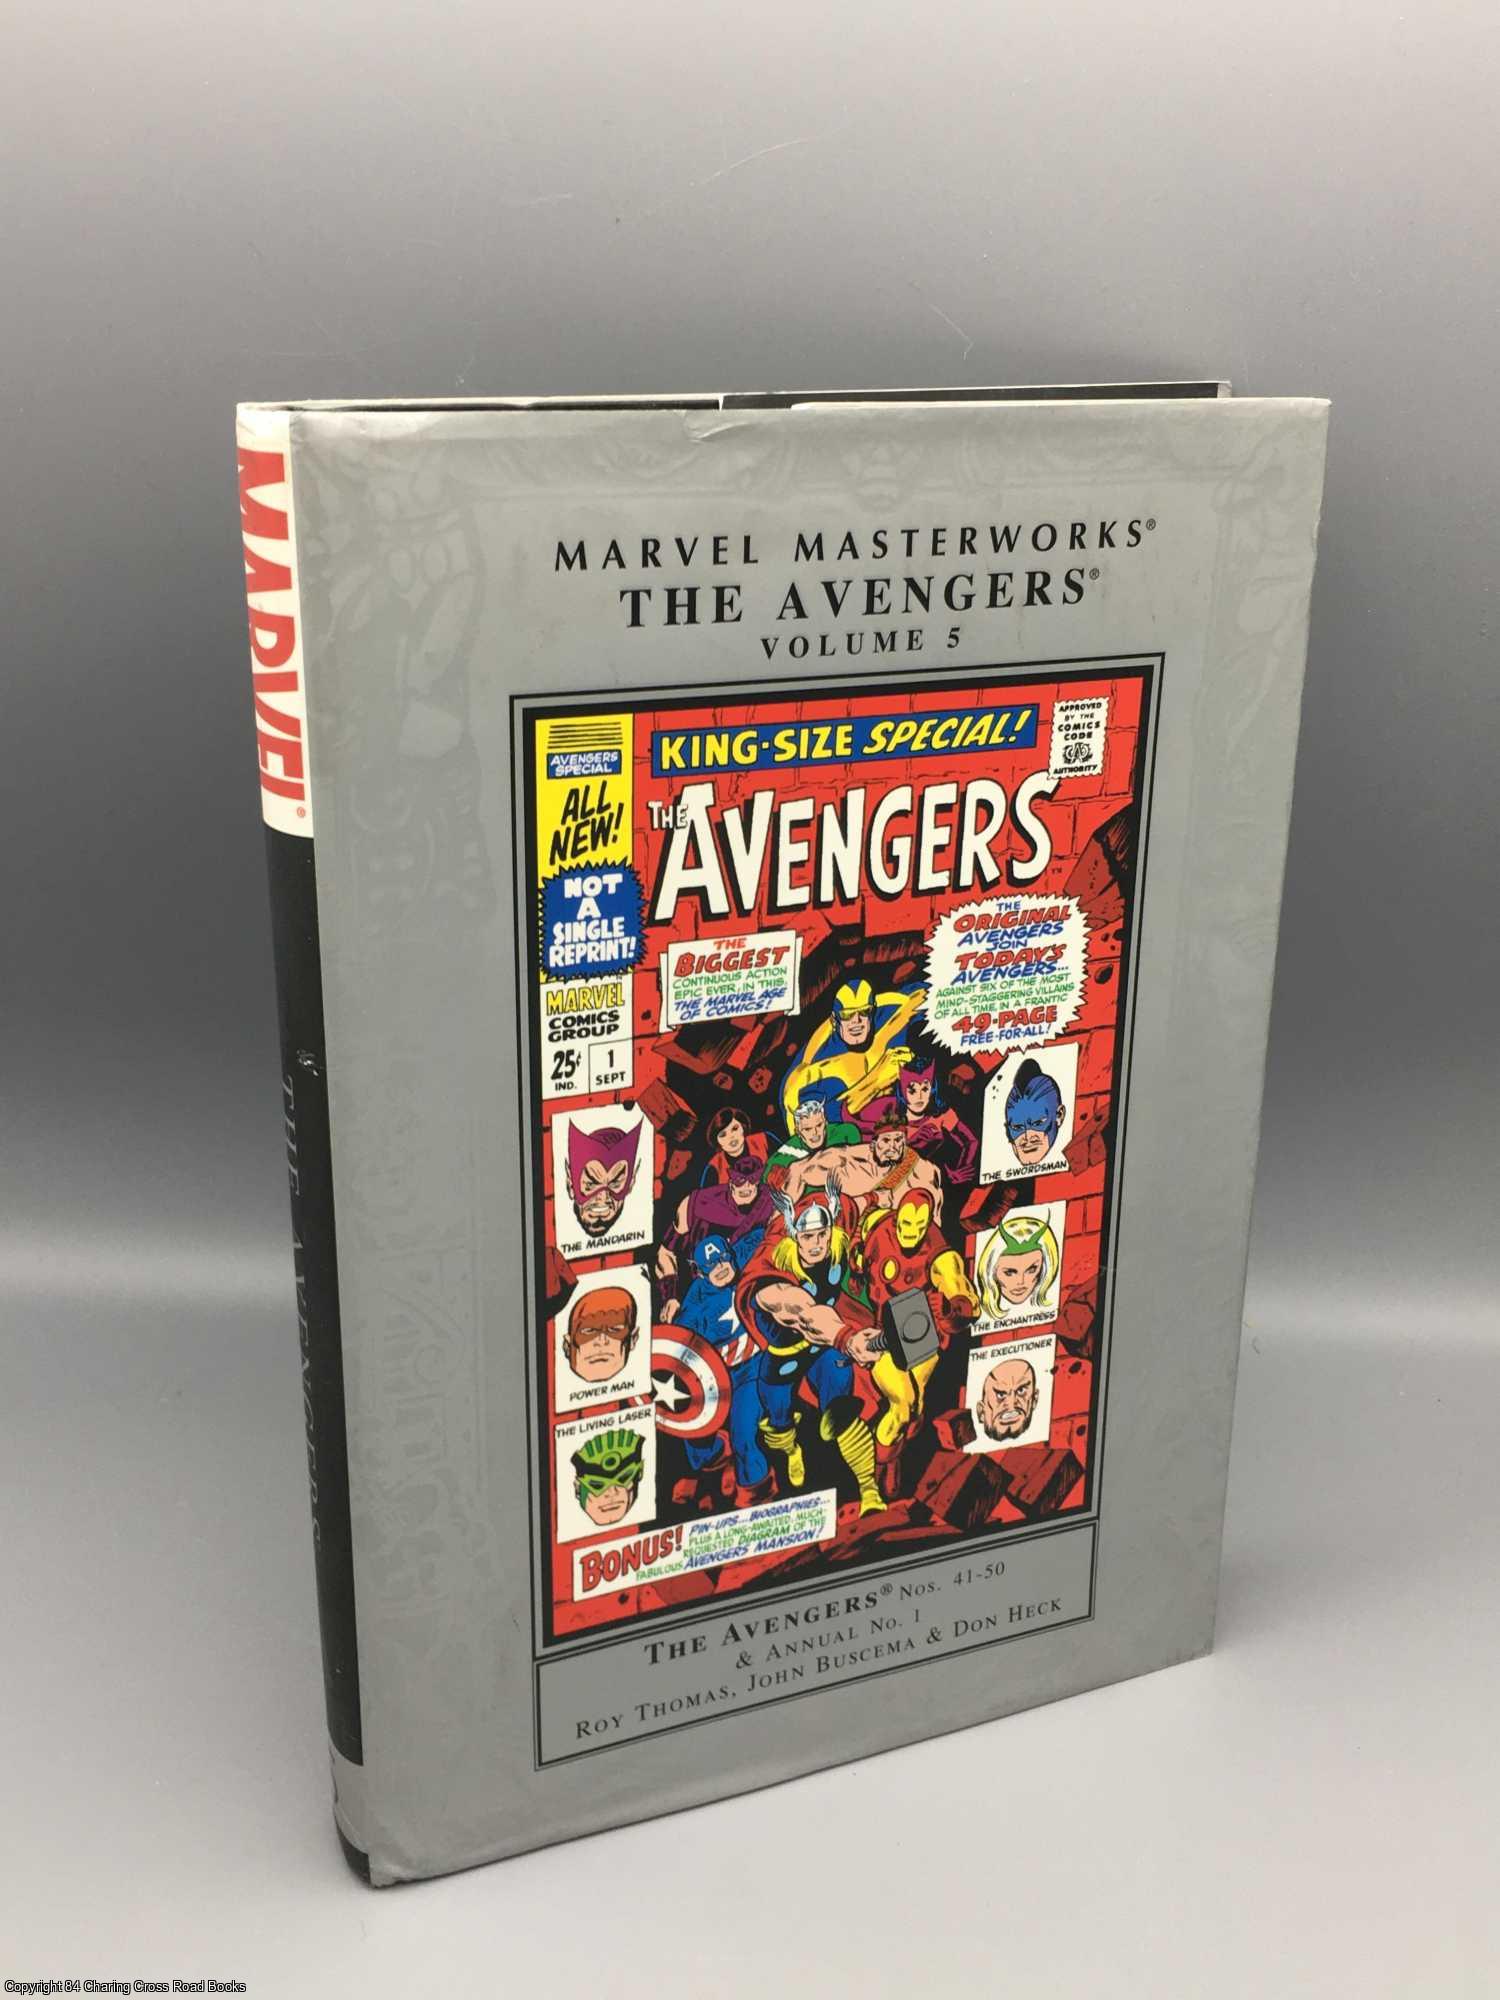 Thomas, Roy - Marvel Masterworks: The Avengers, Vol. 5